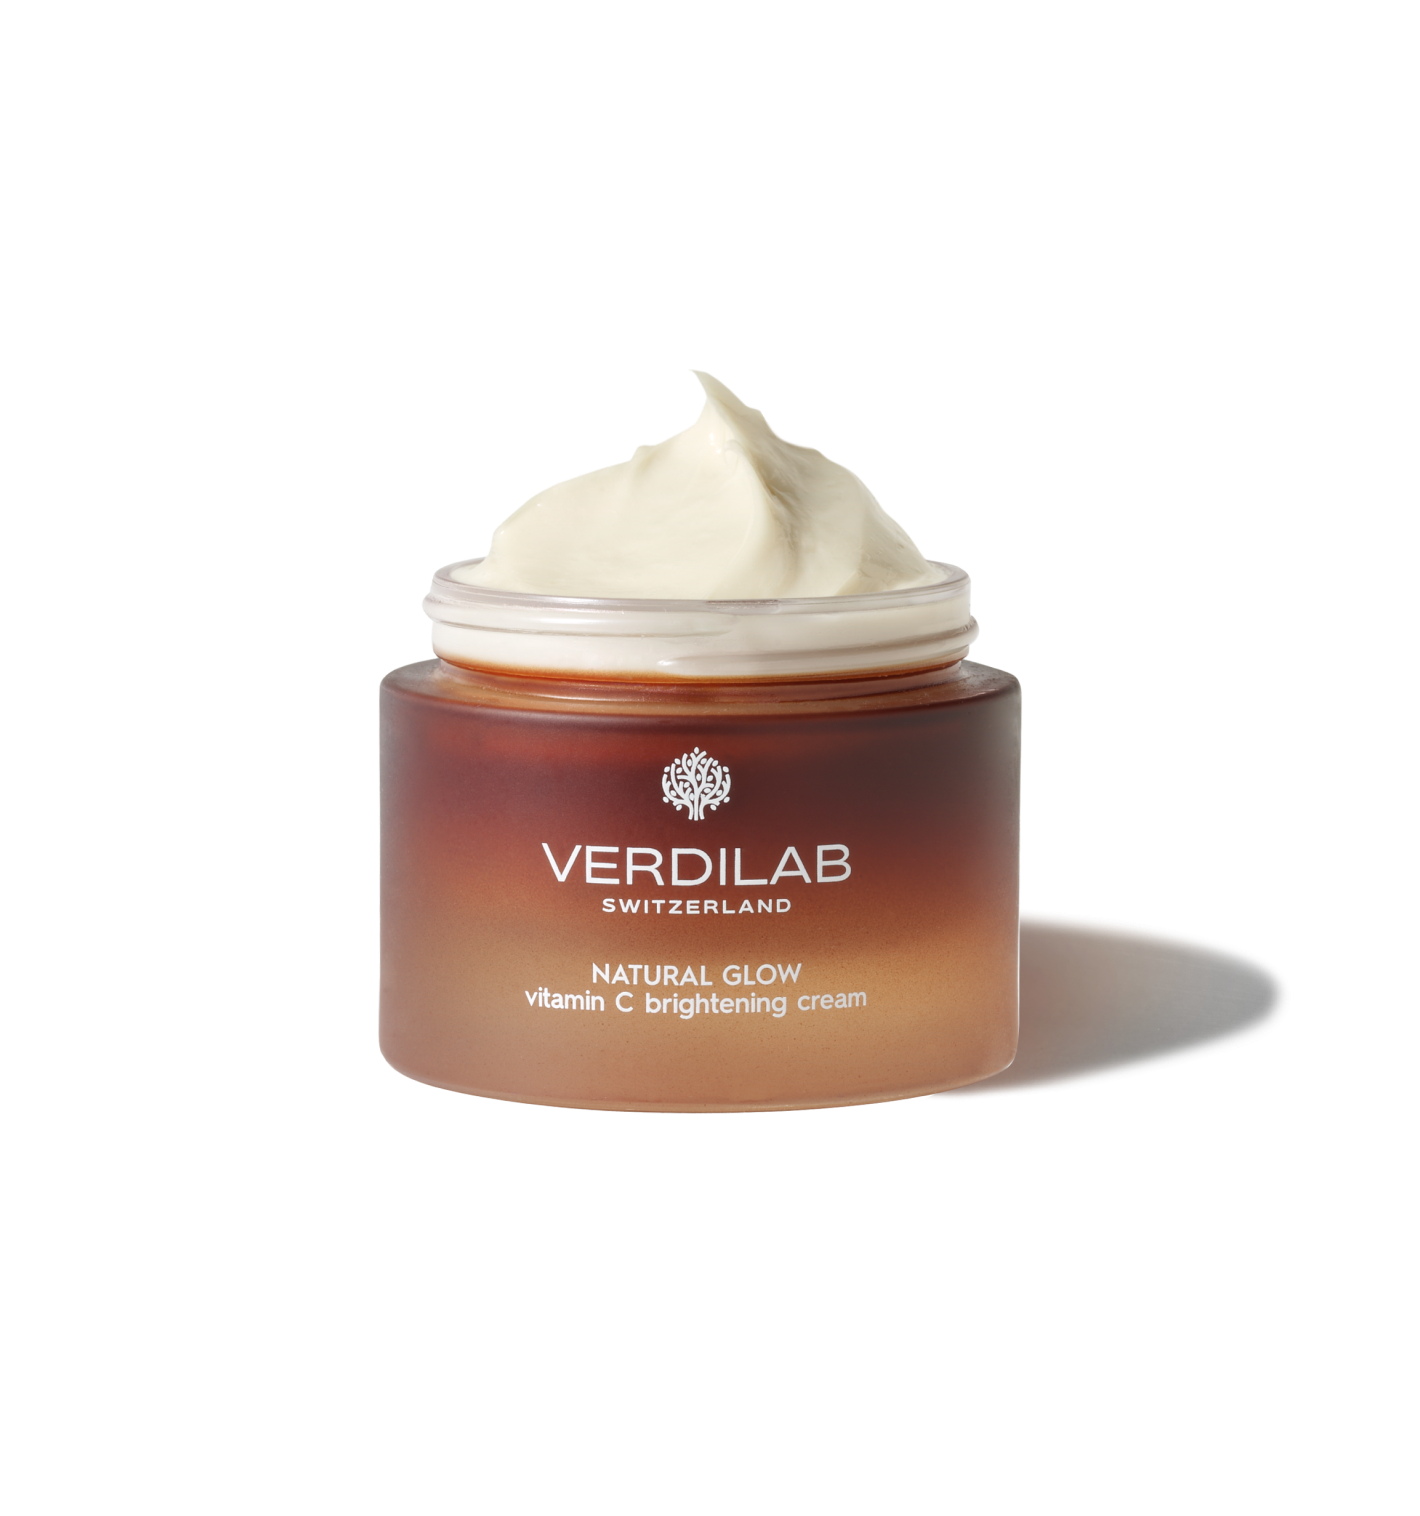 Verdilabs Natural Glow Vitamin C Brightening Cream jar